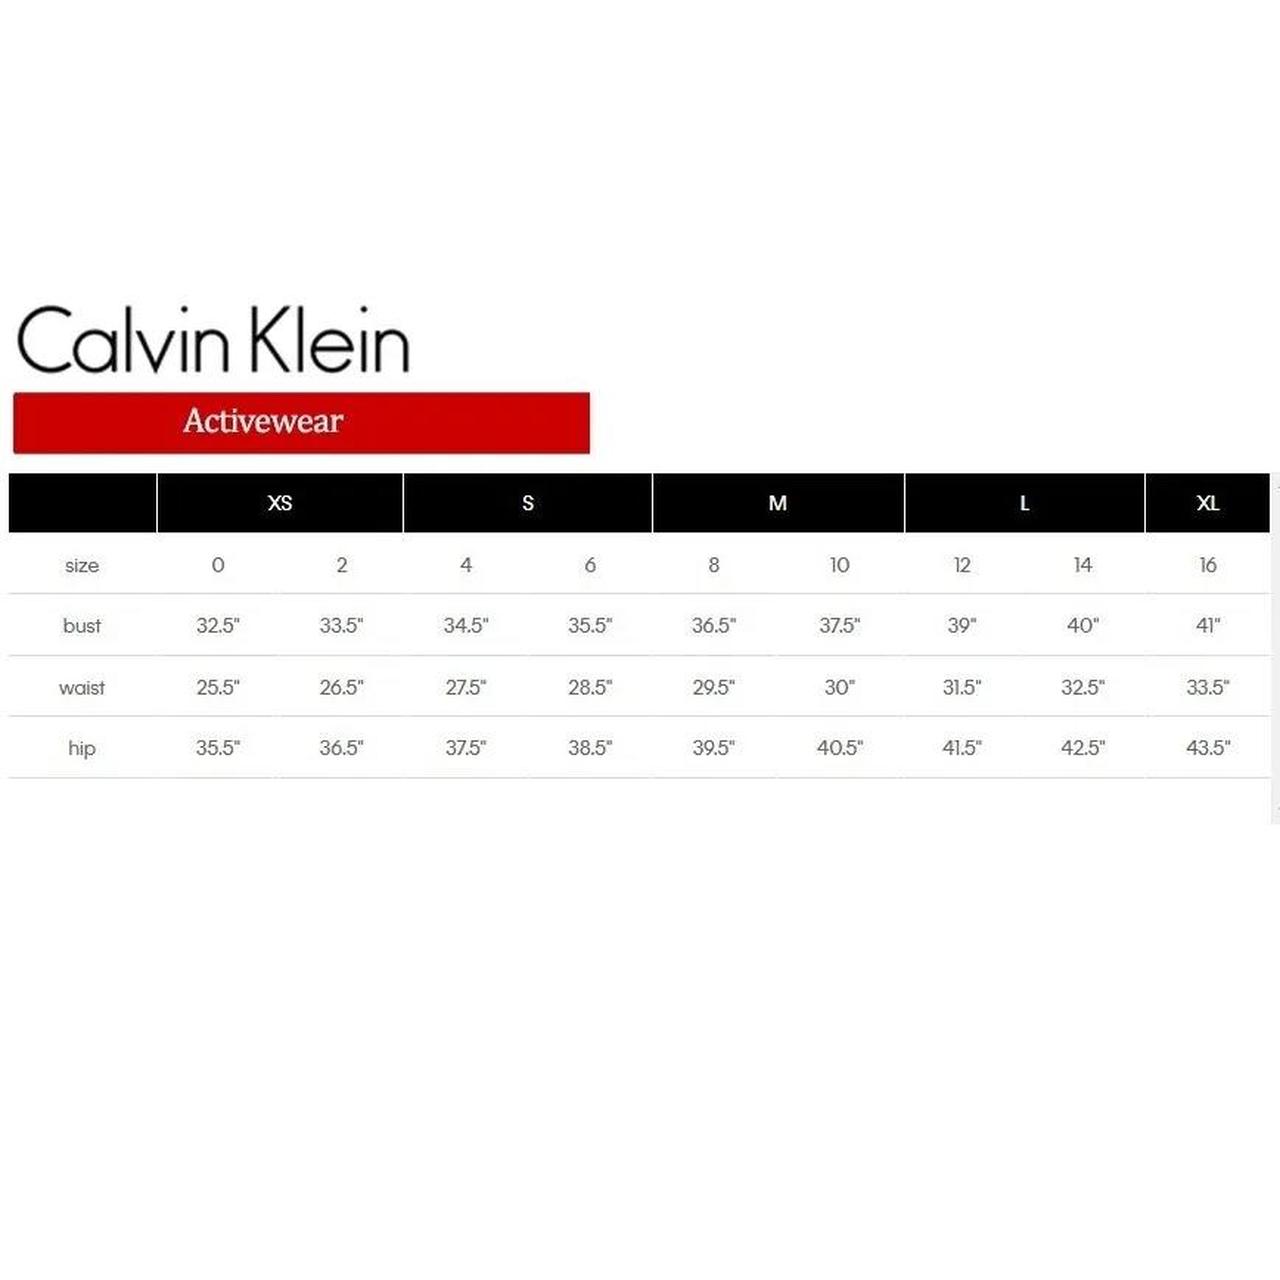 BNWT Calvin Klein Performance Women's 7/8 High-Rise - Depop